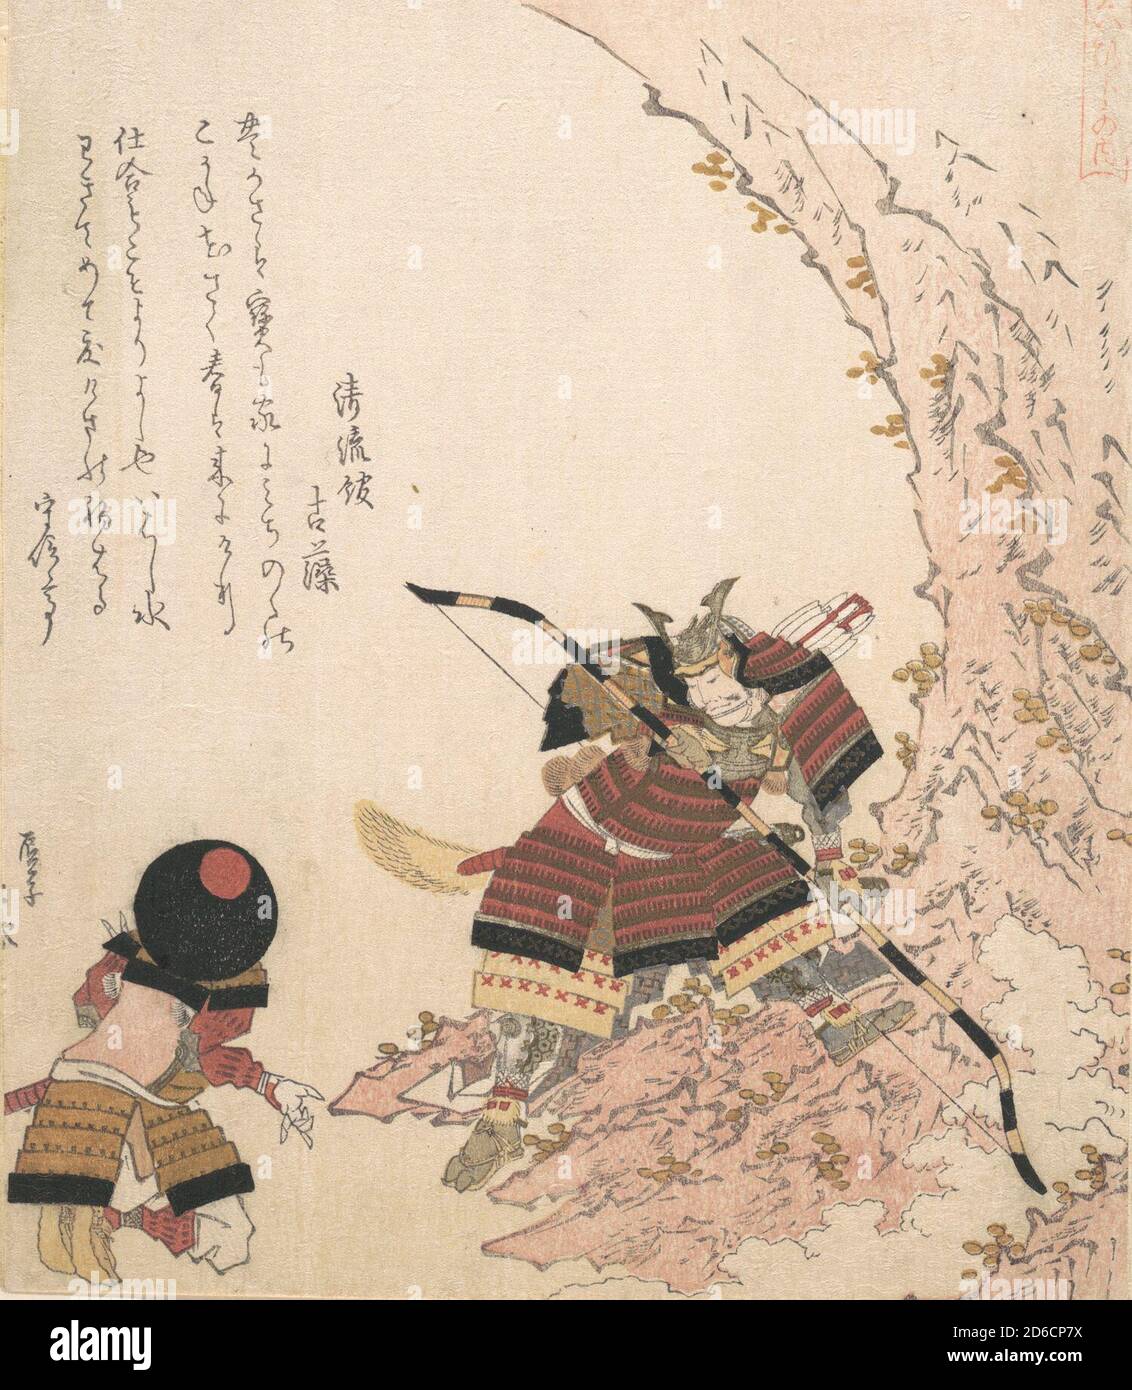 A kunoichi samurai, enhance the kunichi aspect in the artstyle of the verse  empire from aldnoah zero